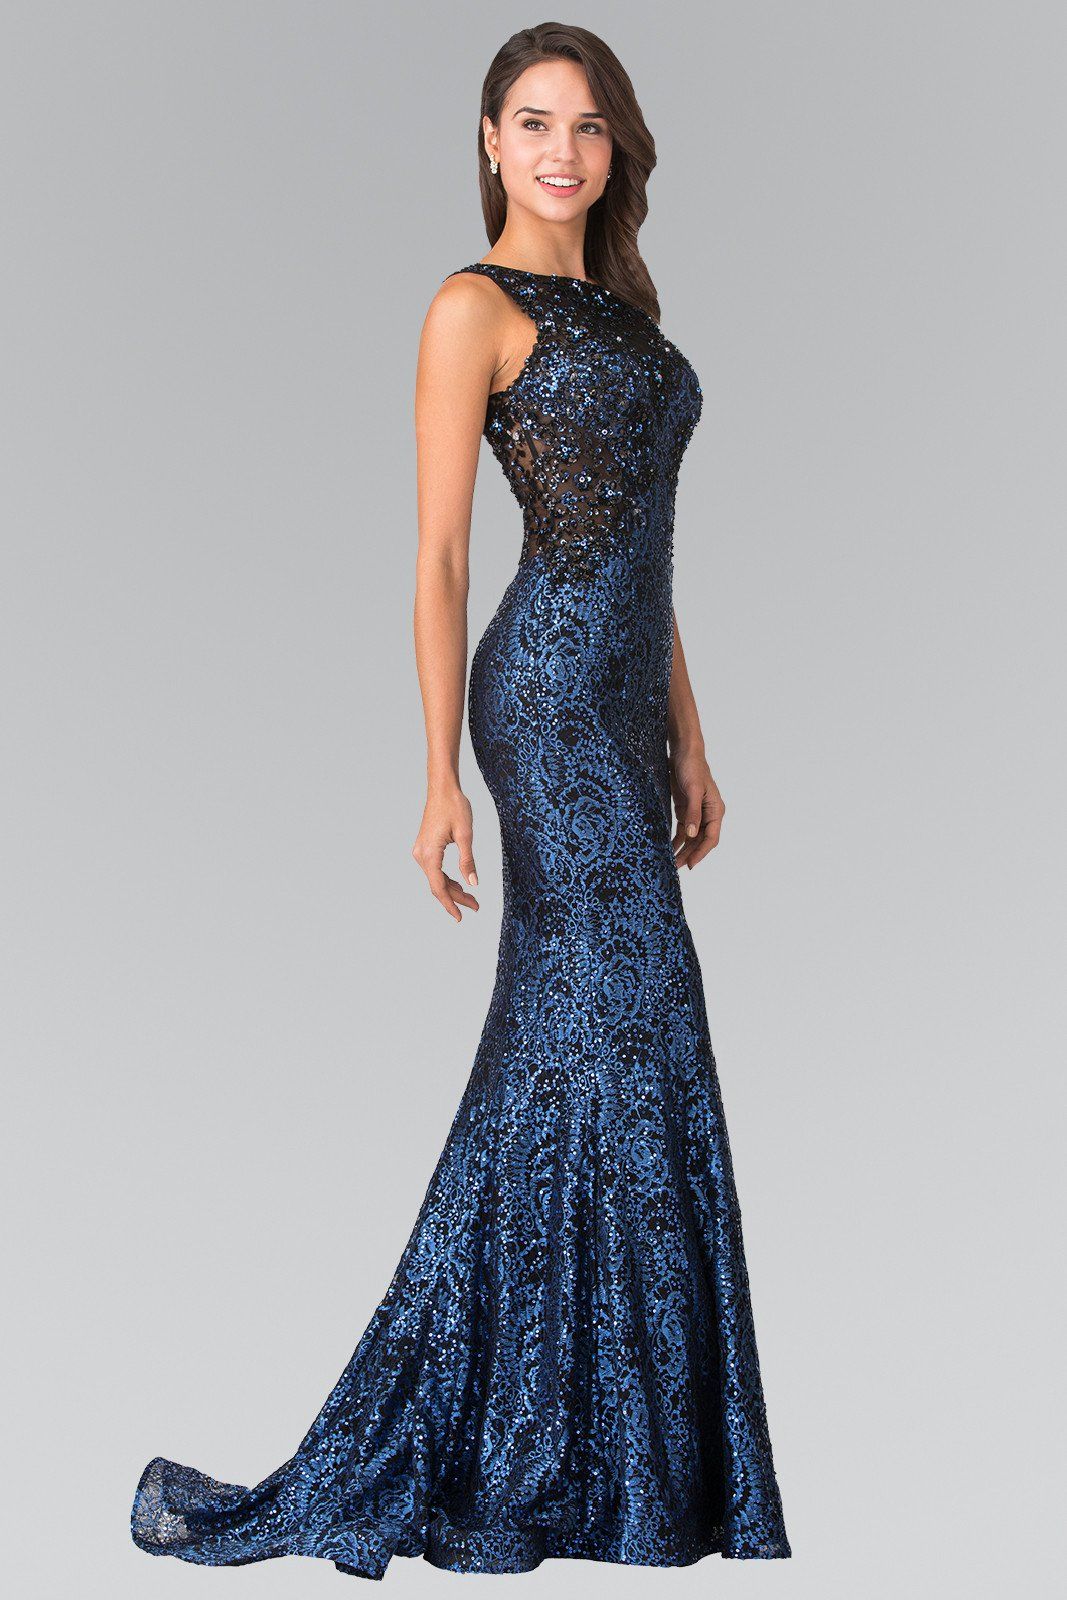 Long Flower Sequined Lace Dress by Elizabeth K GL2268-Long Formal Dresses-ABC Fashion